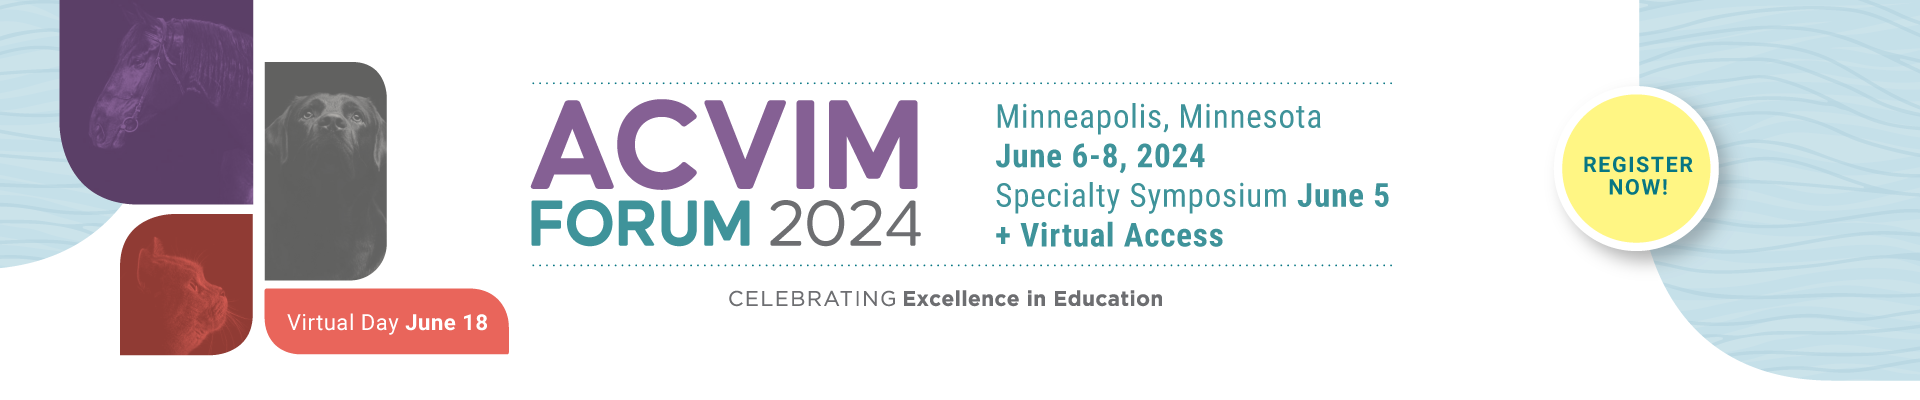 ACVIM Forum 2024. Celebrating Excellence in Education. Register Now!